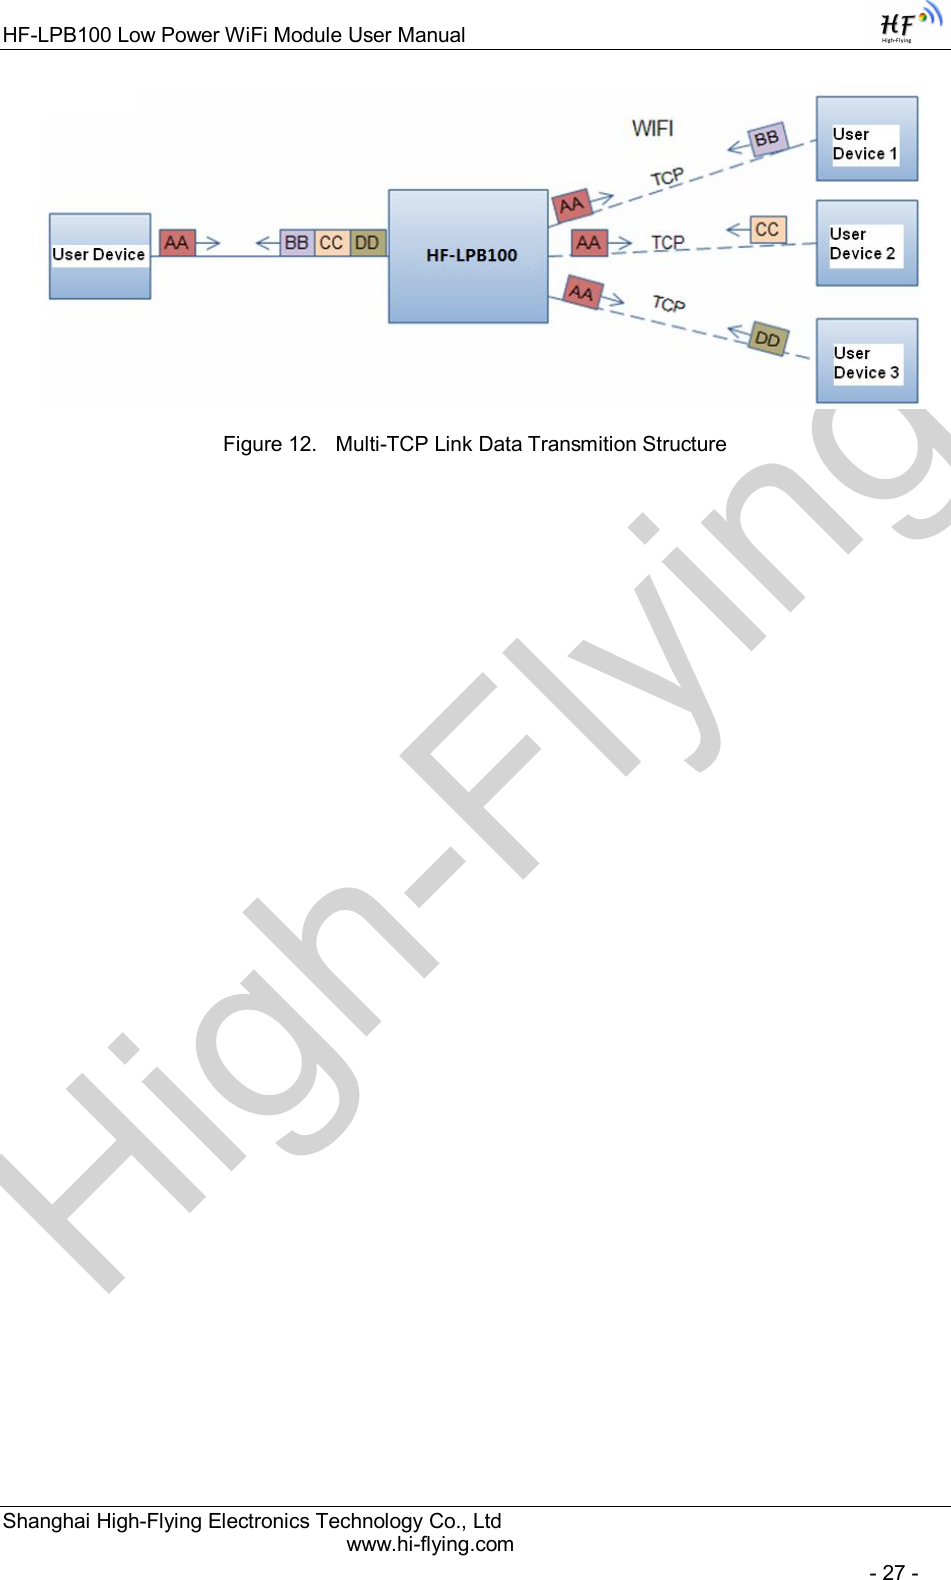 High-FlyingHF-LPB100 Low Power WiFi Module User Manual Shanghai High-Flying Electronics Technology Co., Ltd www.hi-flying.com   - 27 -  Figure 12.  Multi-TCP Link Data Transmition Structure  